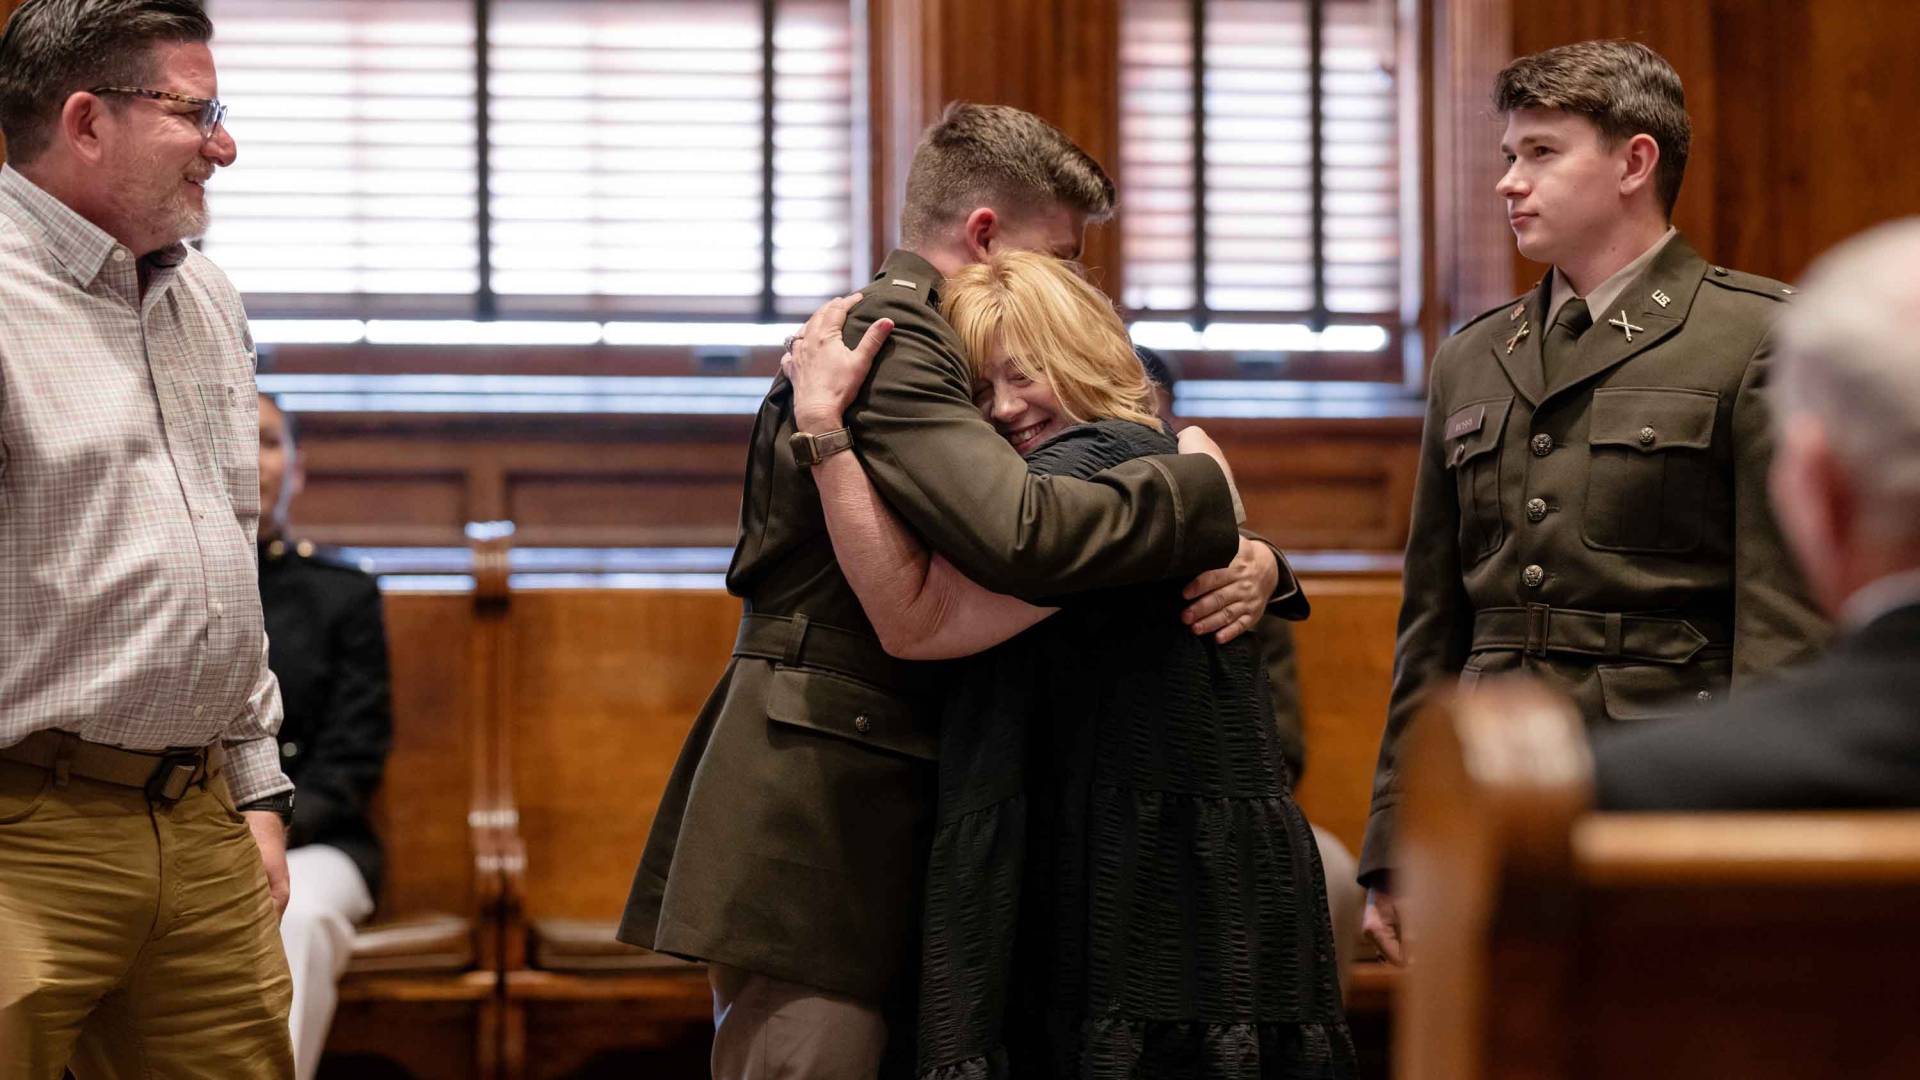 New ROTC cadet hugging family members